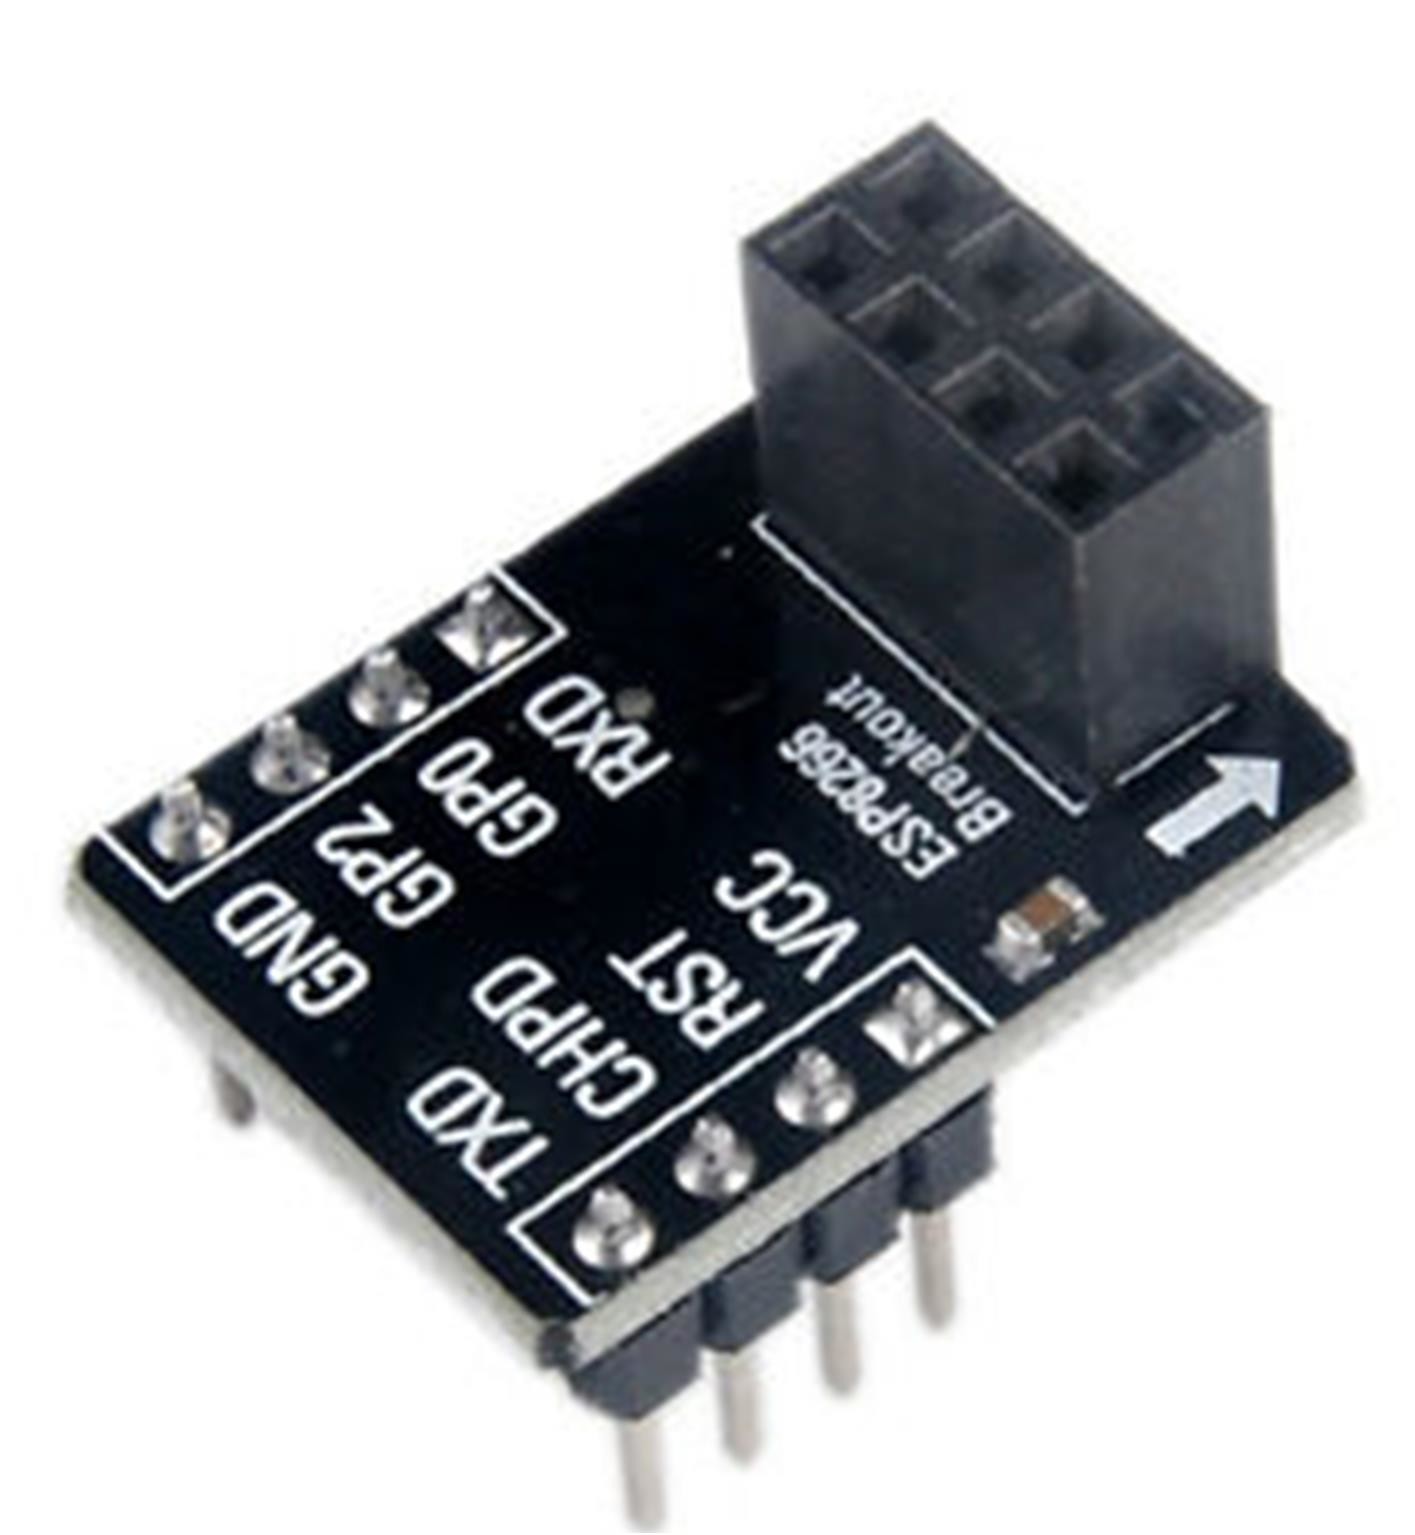 ESP-01 breadboard adapter for Raspberry Pi Pico project